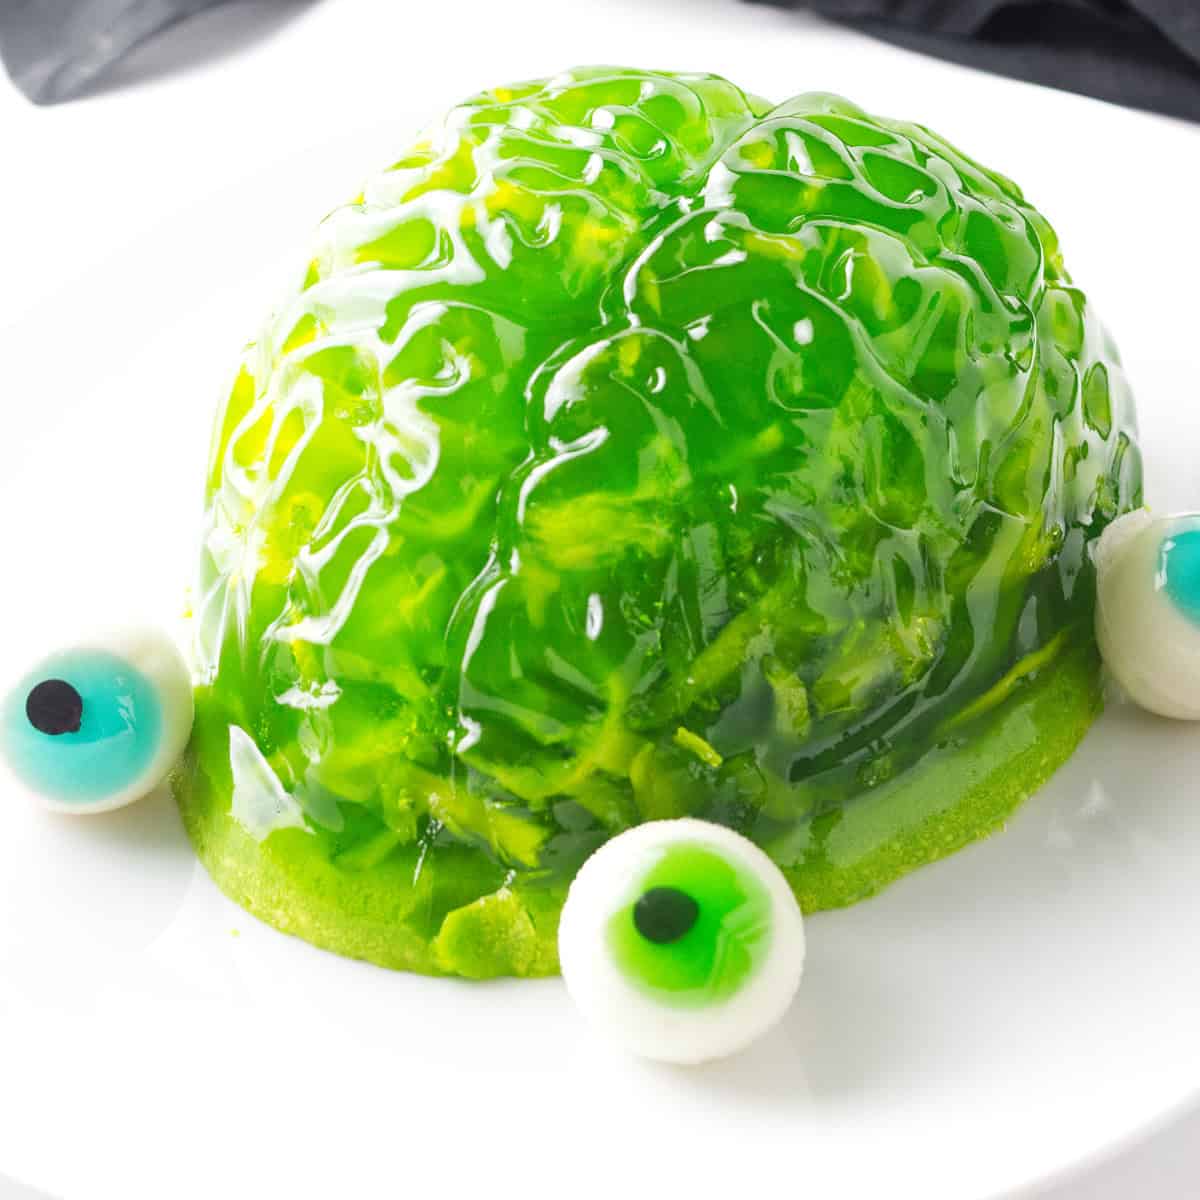 Green spooky halloween brain jello dessert.